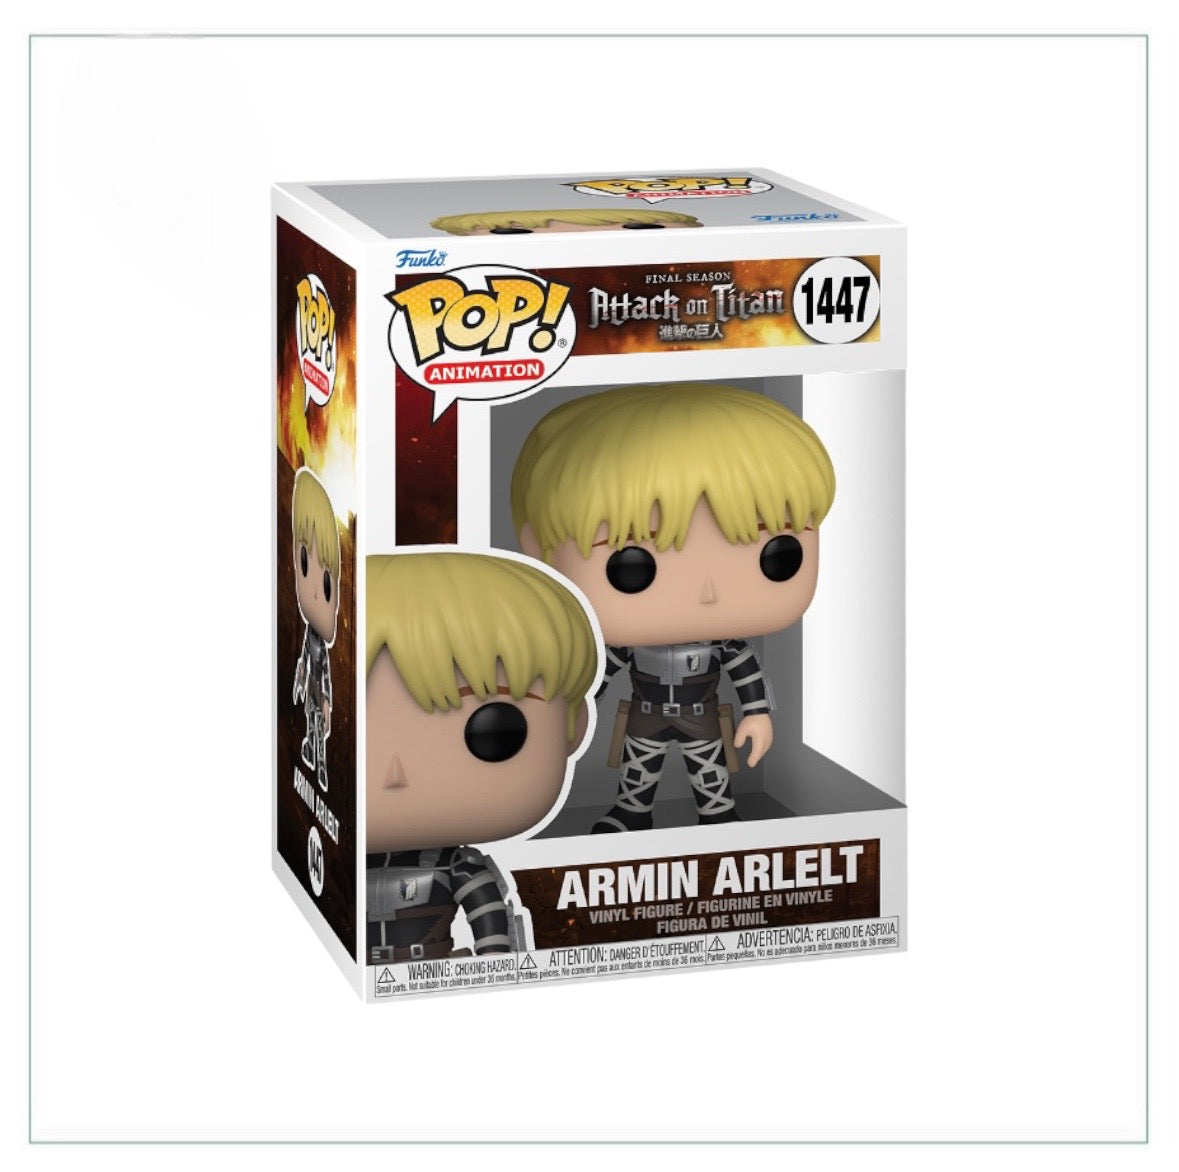 Armin Arlelt #1447 Funko Pop! - Attack on Titan